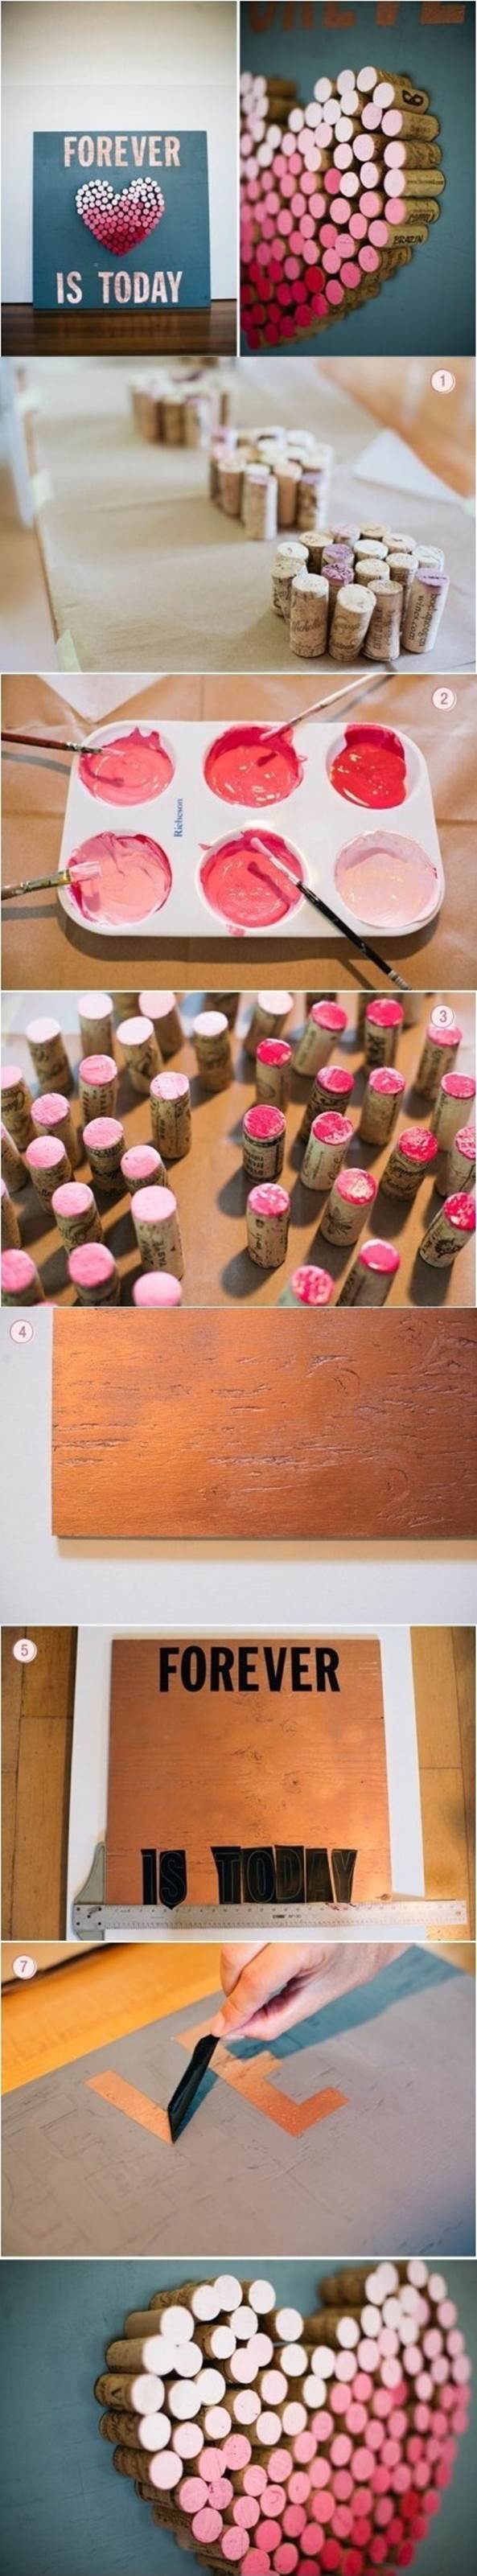 DIY Heart Shaped Wine Cork Wall Decor 2